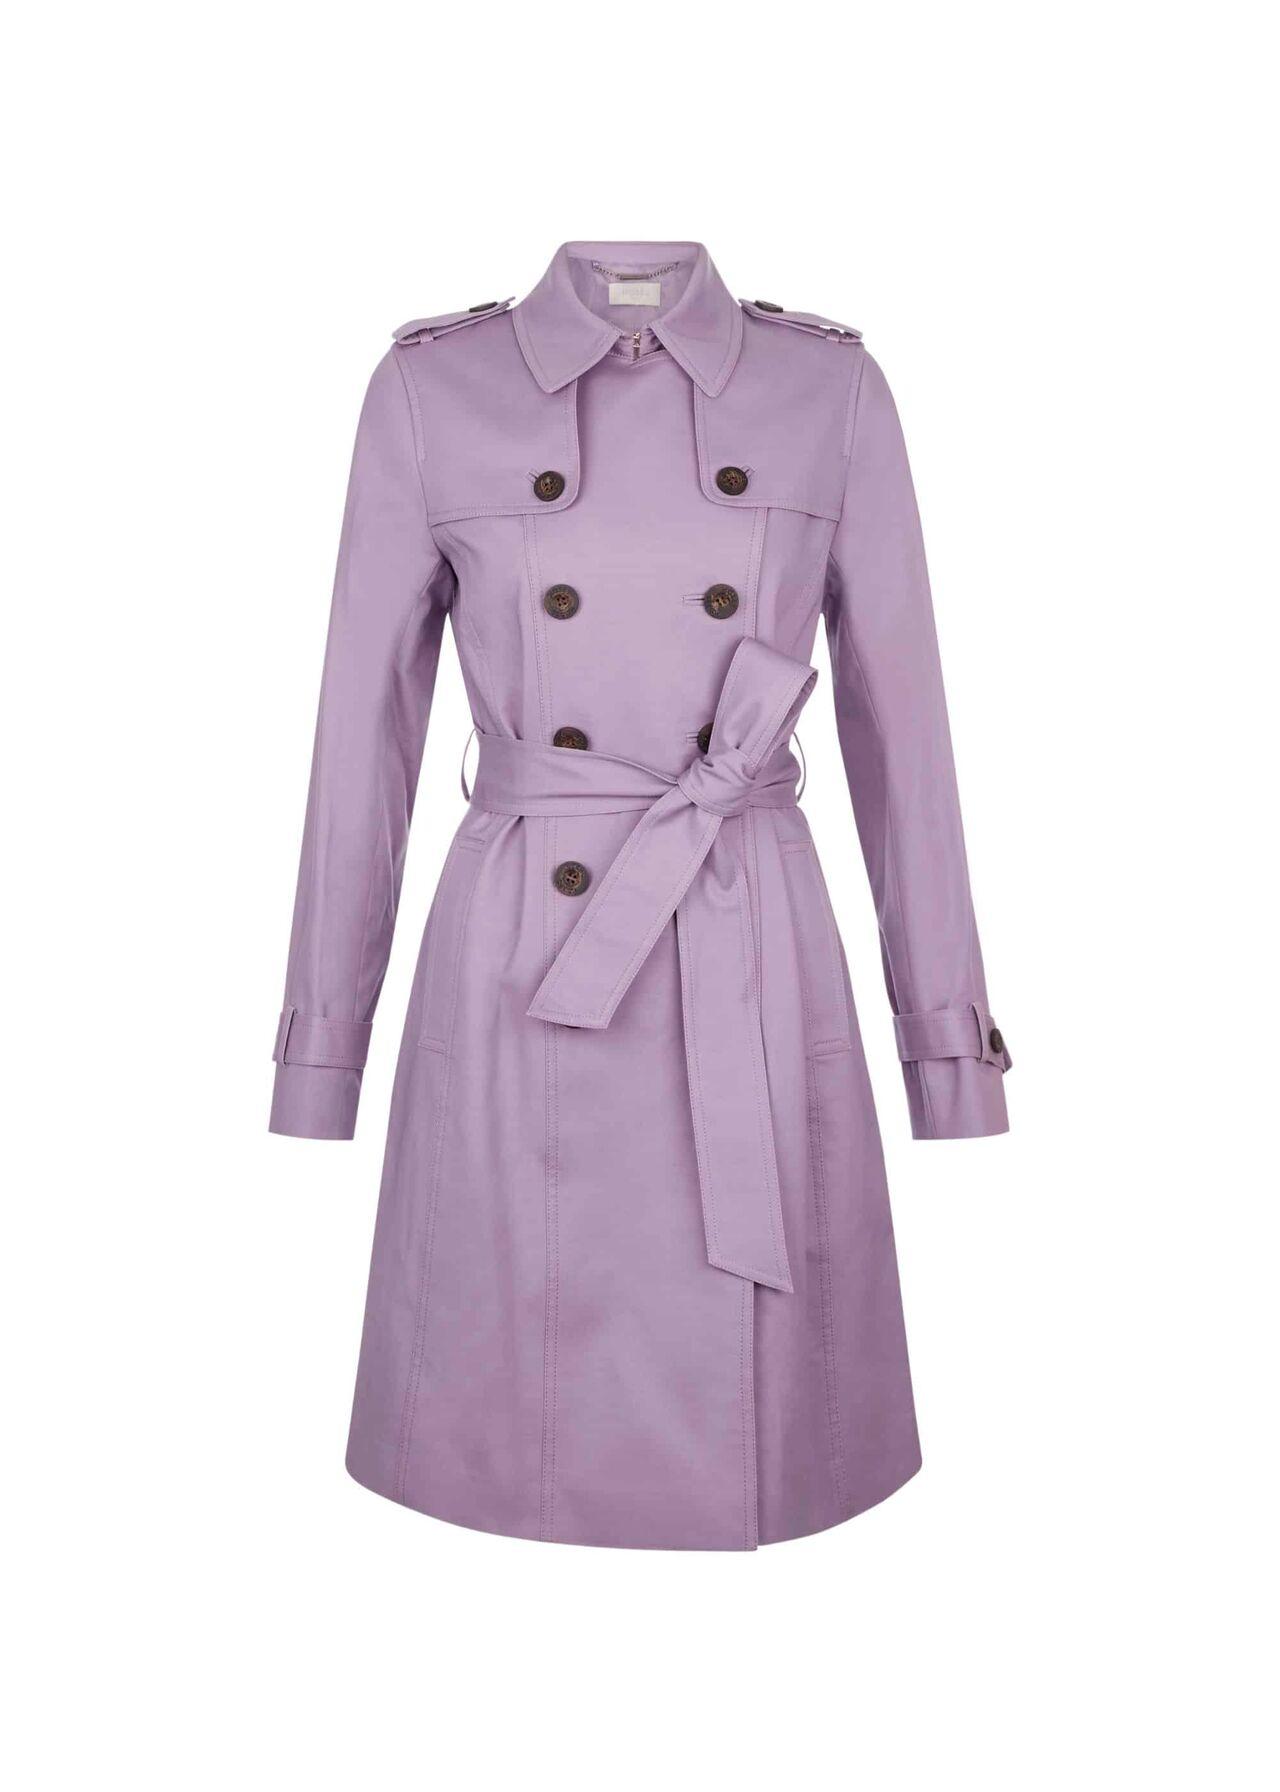 Hobbs Cotton London Saskia Trench Coat in Lilac (Purple) - Lyst